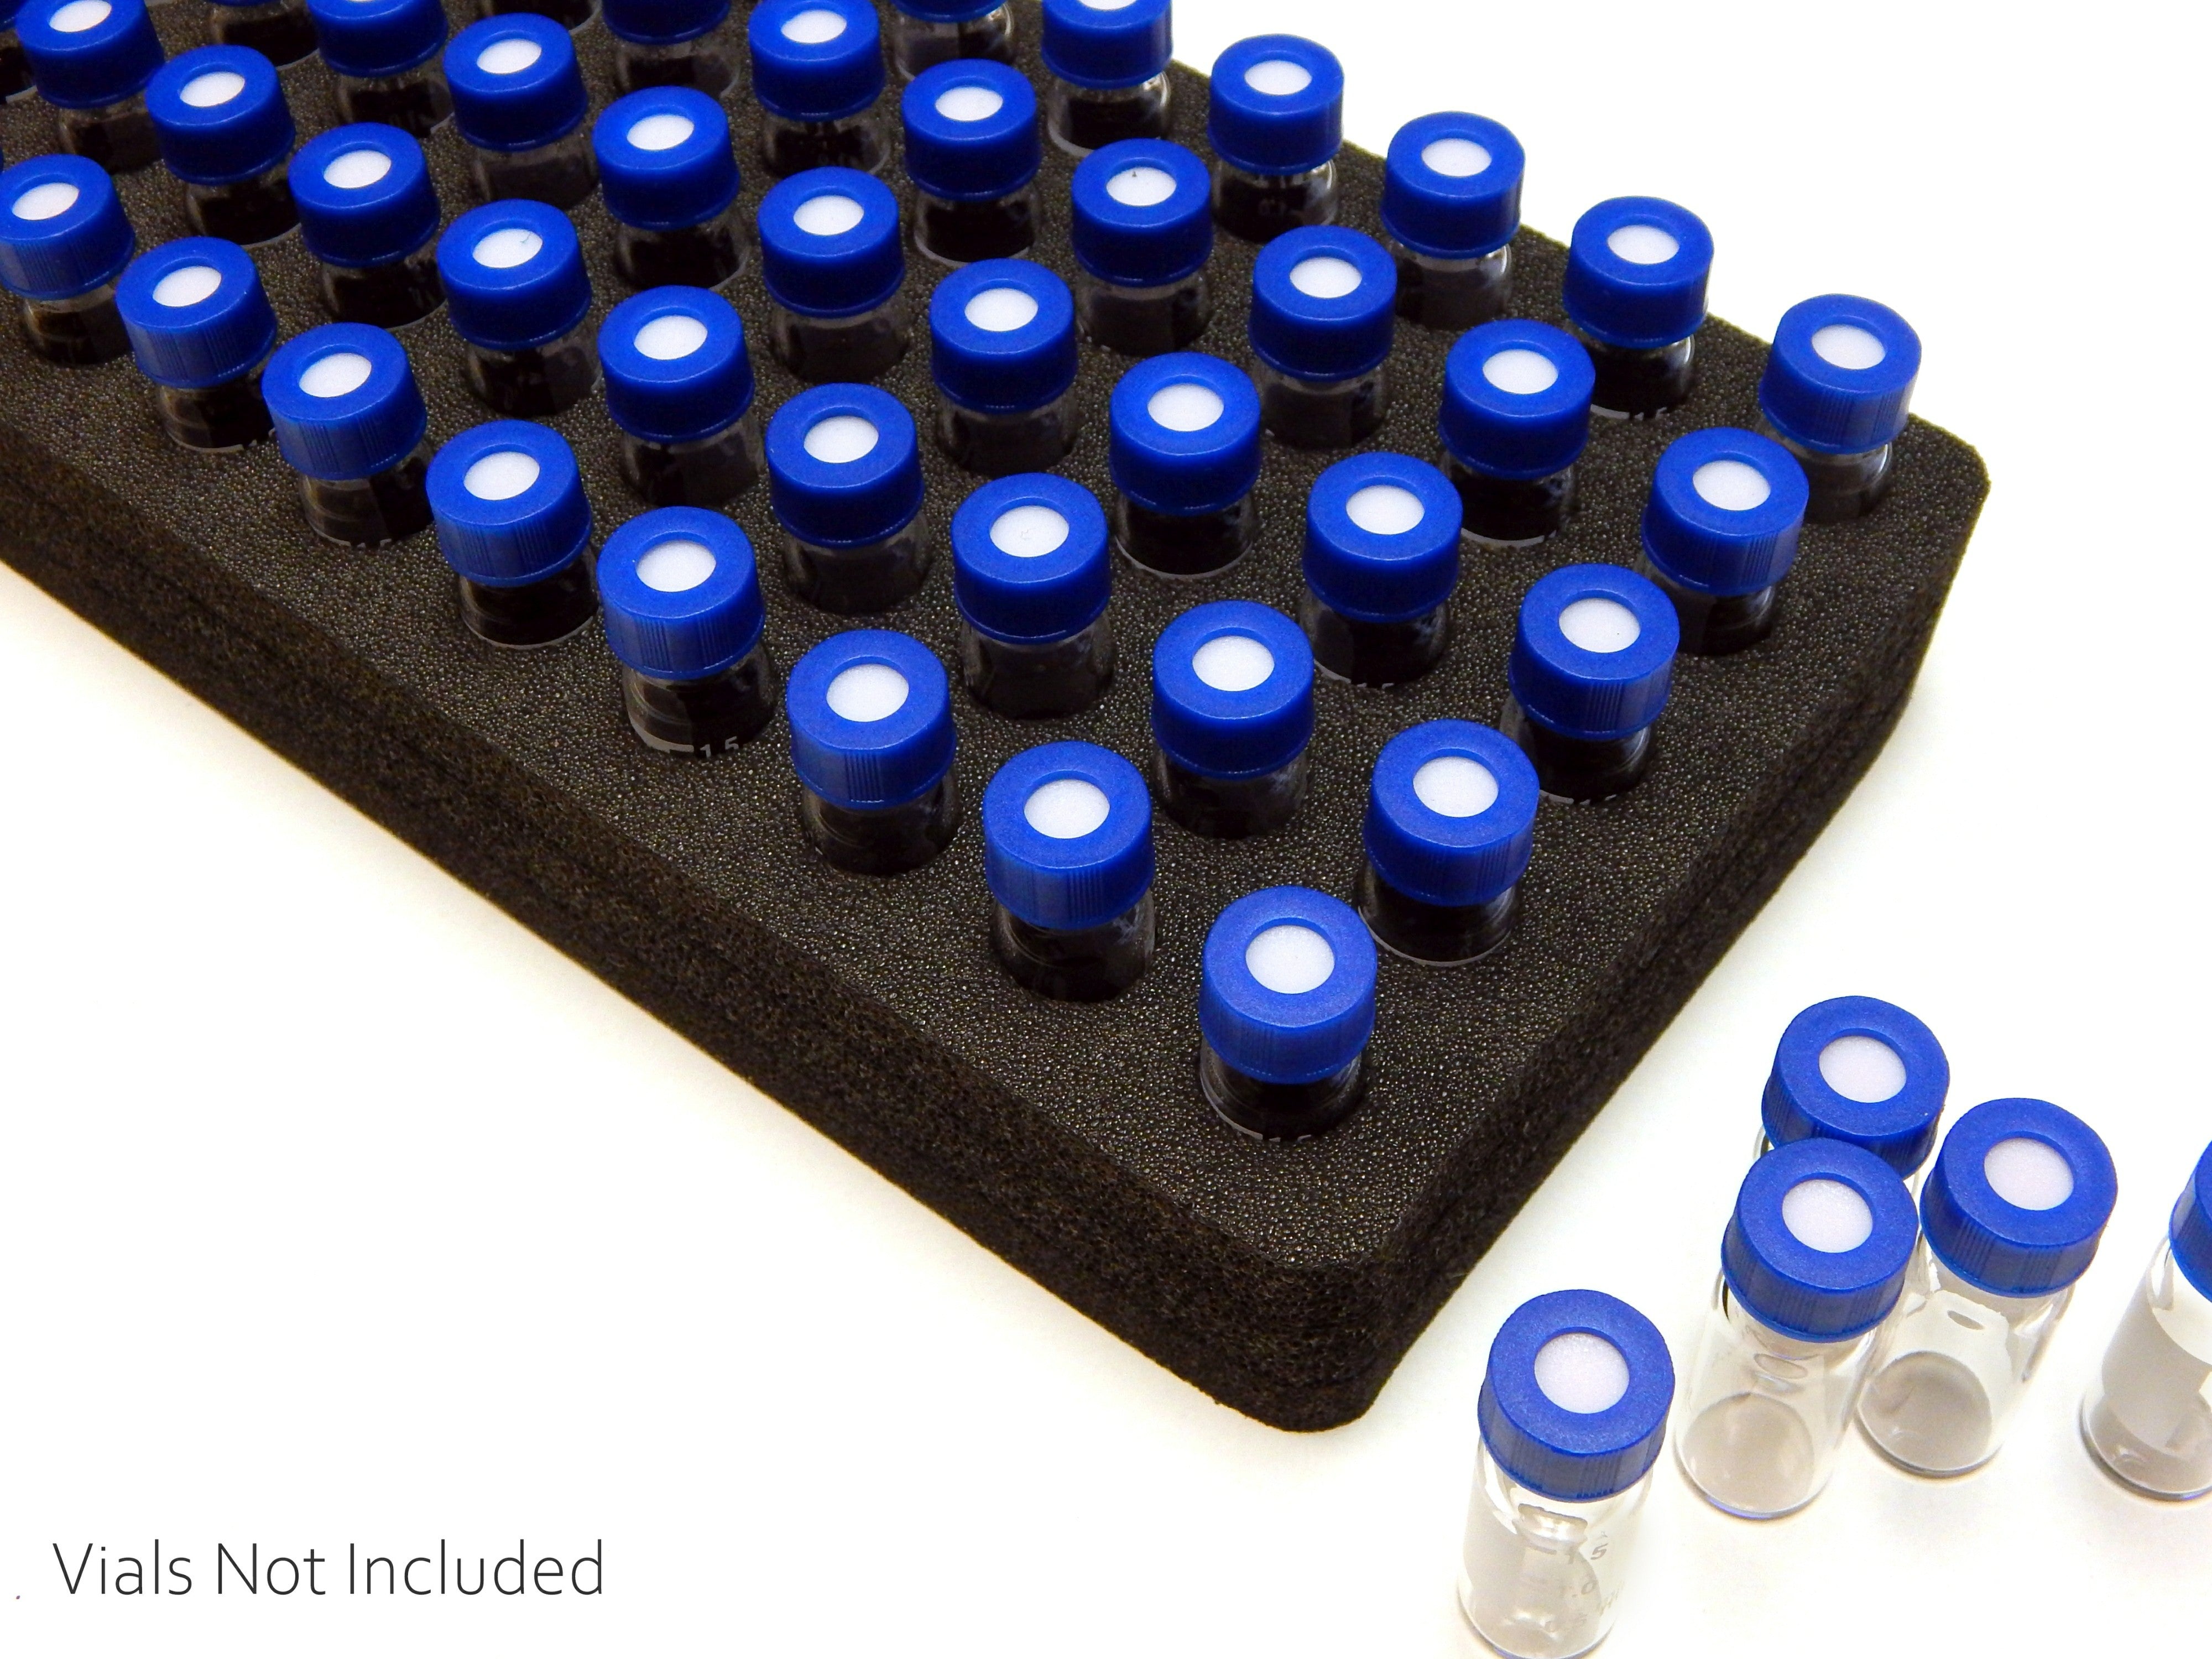 Centrifuge Vial Organizer Black Foam Storage Rack Stand Transport Holds 50 Vials Fits up to 12mm 2ml Diameter Tubes